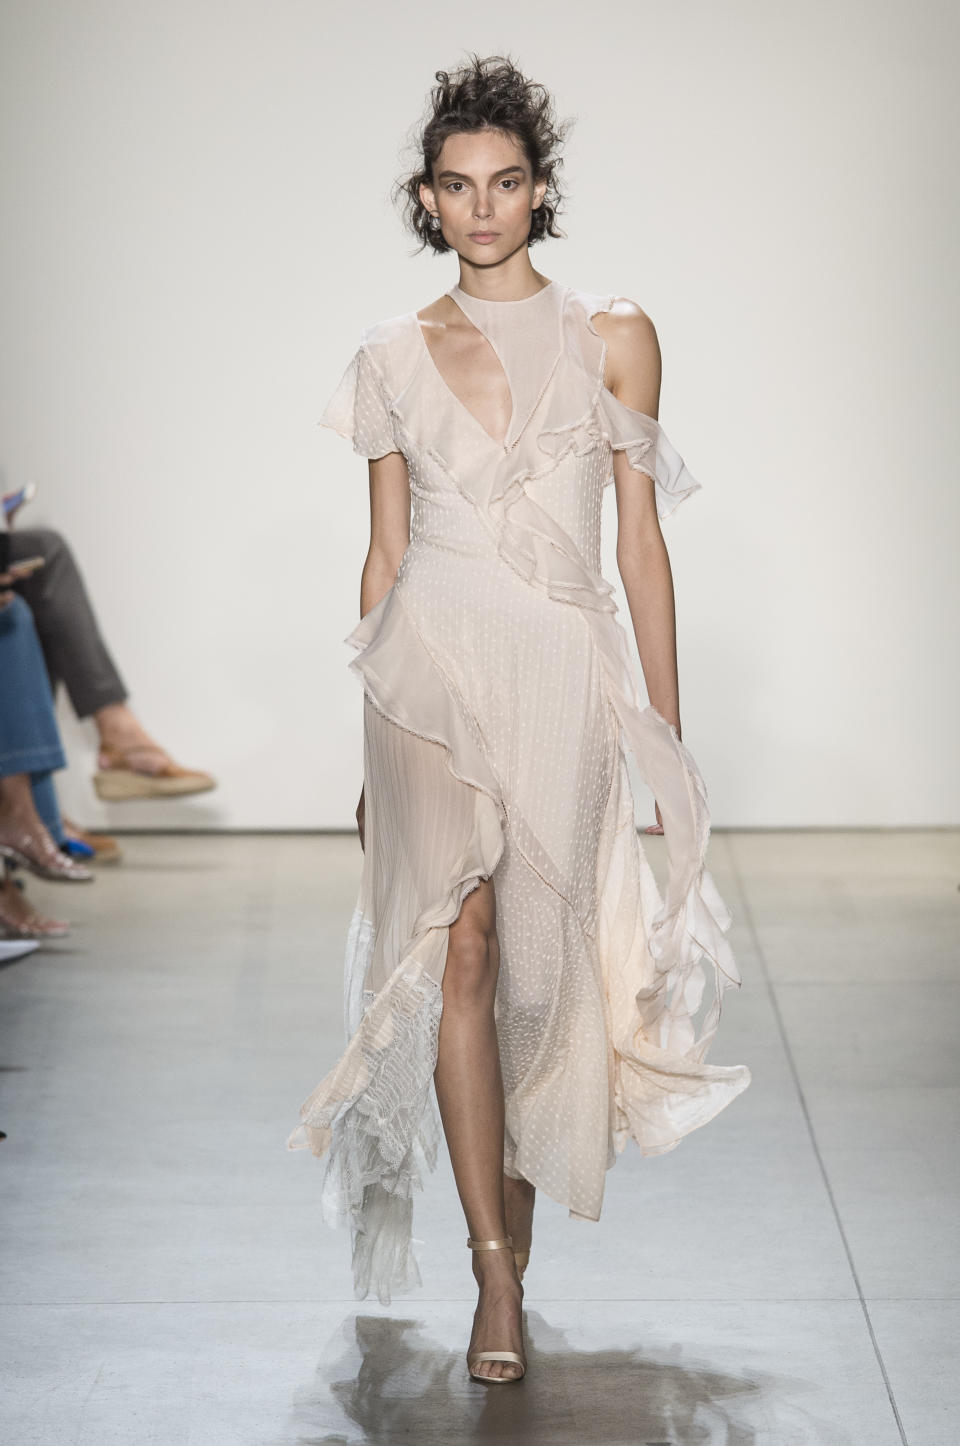 <p><i>Model wears a sheer ruffled dress from the SS18 Jonathan Simkhai collection. (Photo: ImaxTree) </i></p>